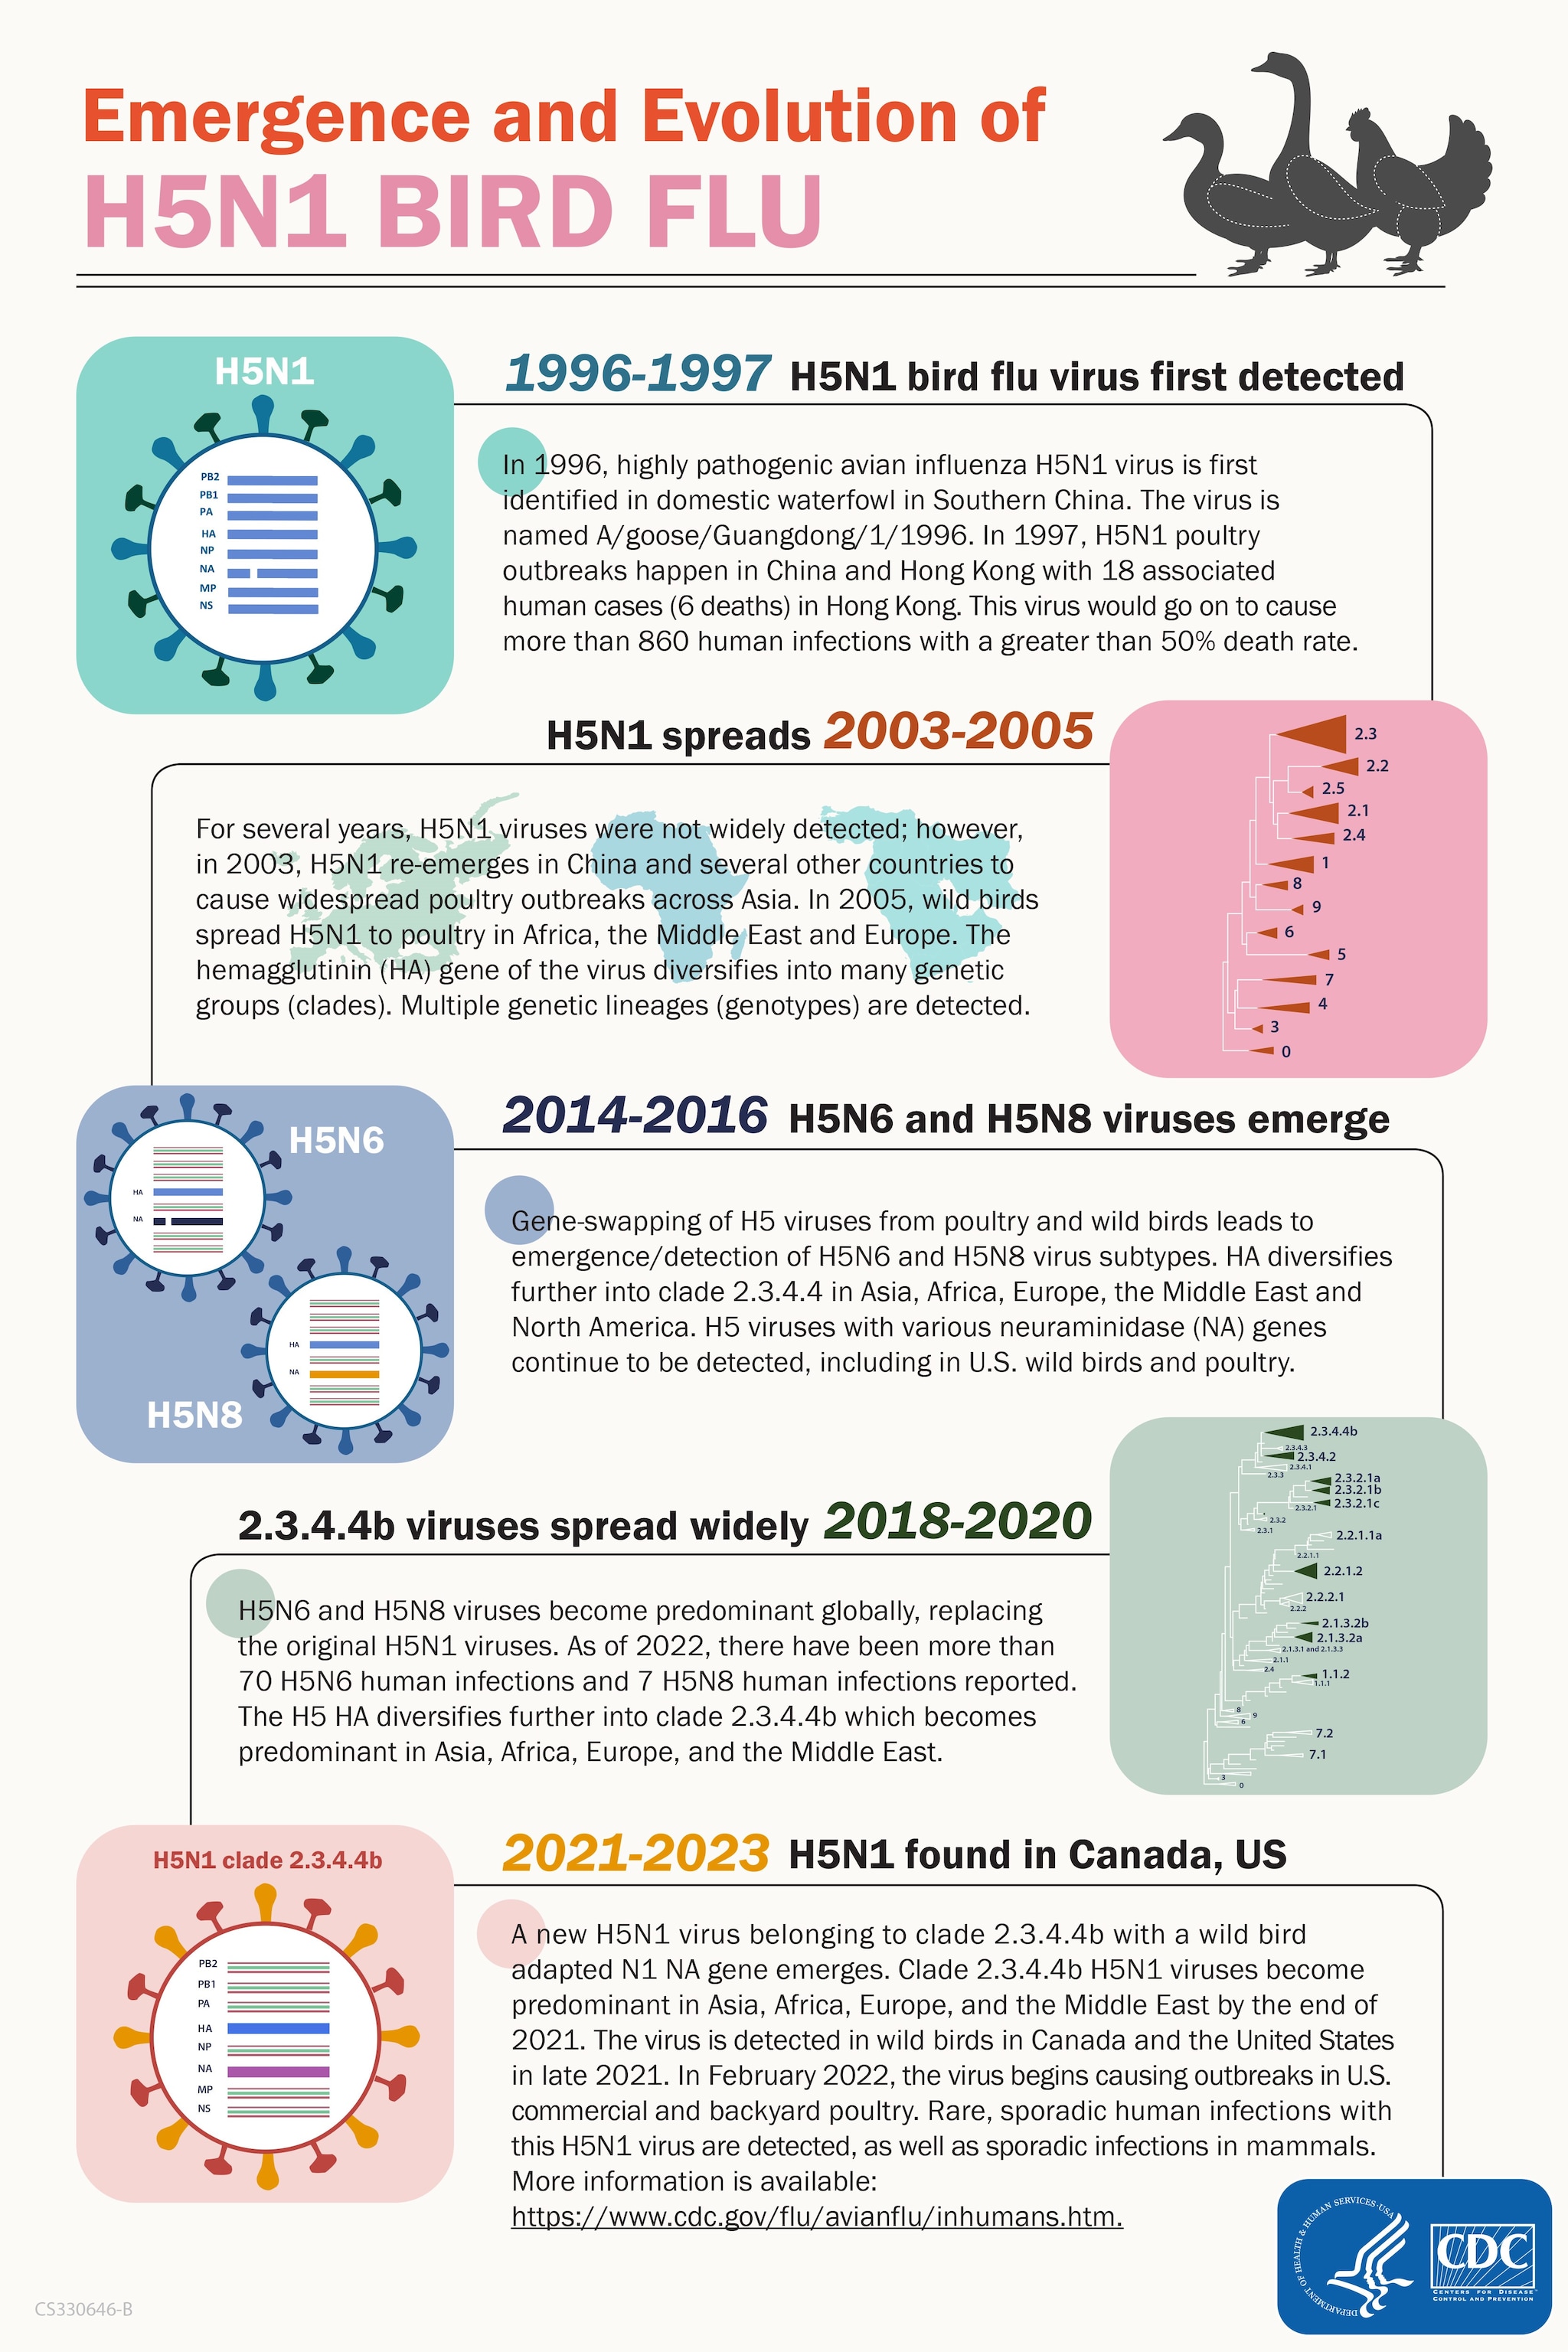 Emergence and Evolution of H5N1 Bird Flu PDF image